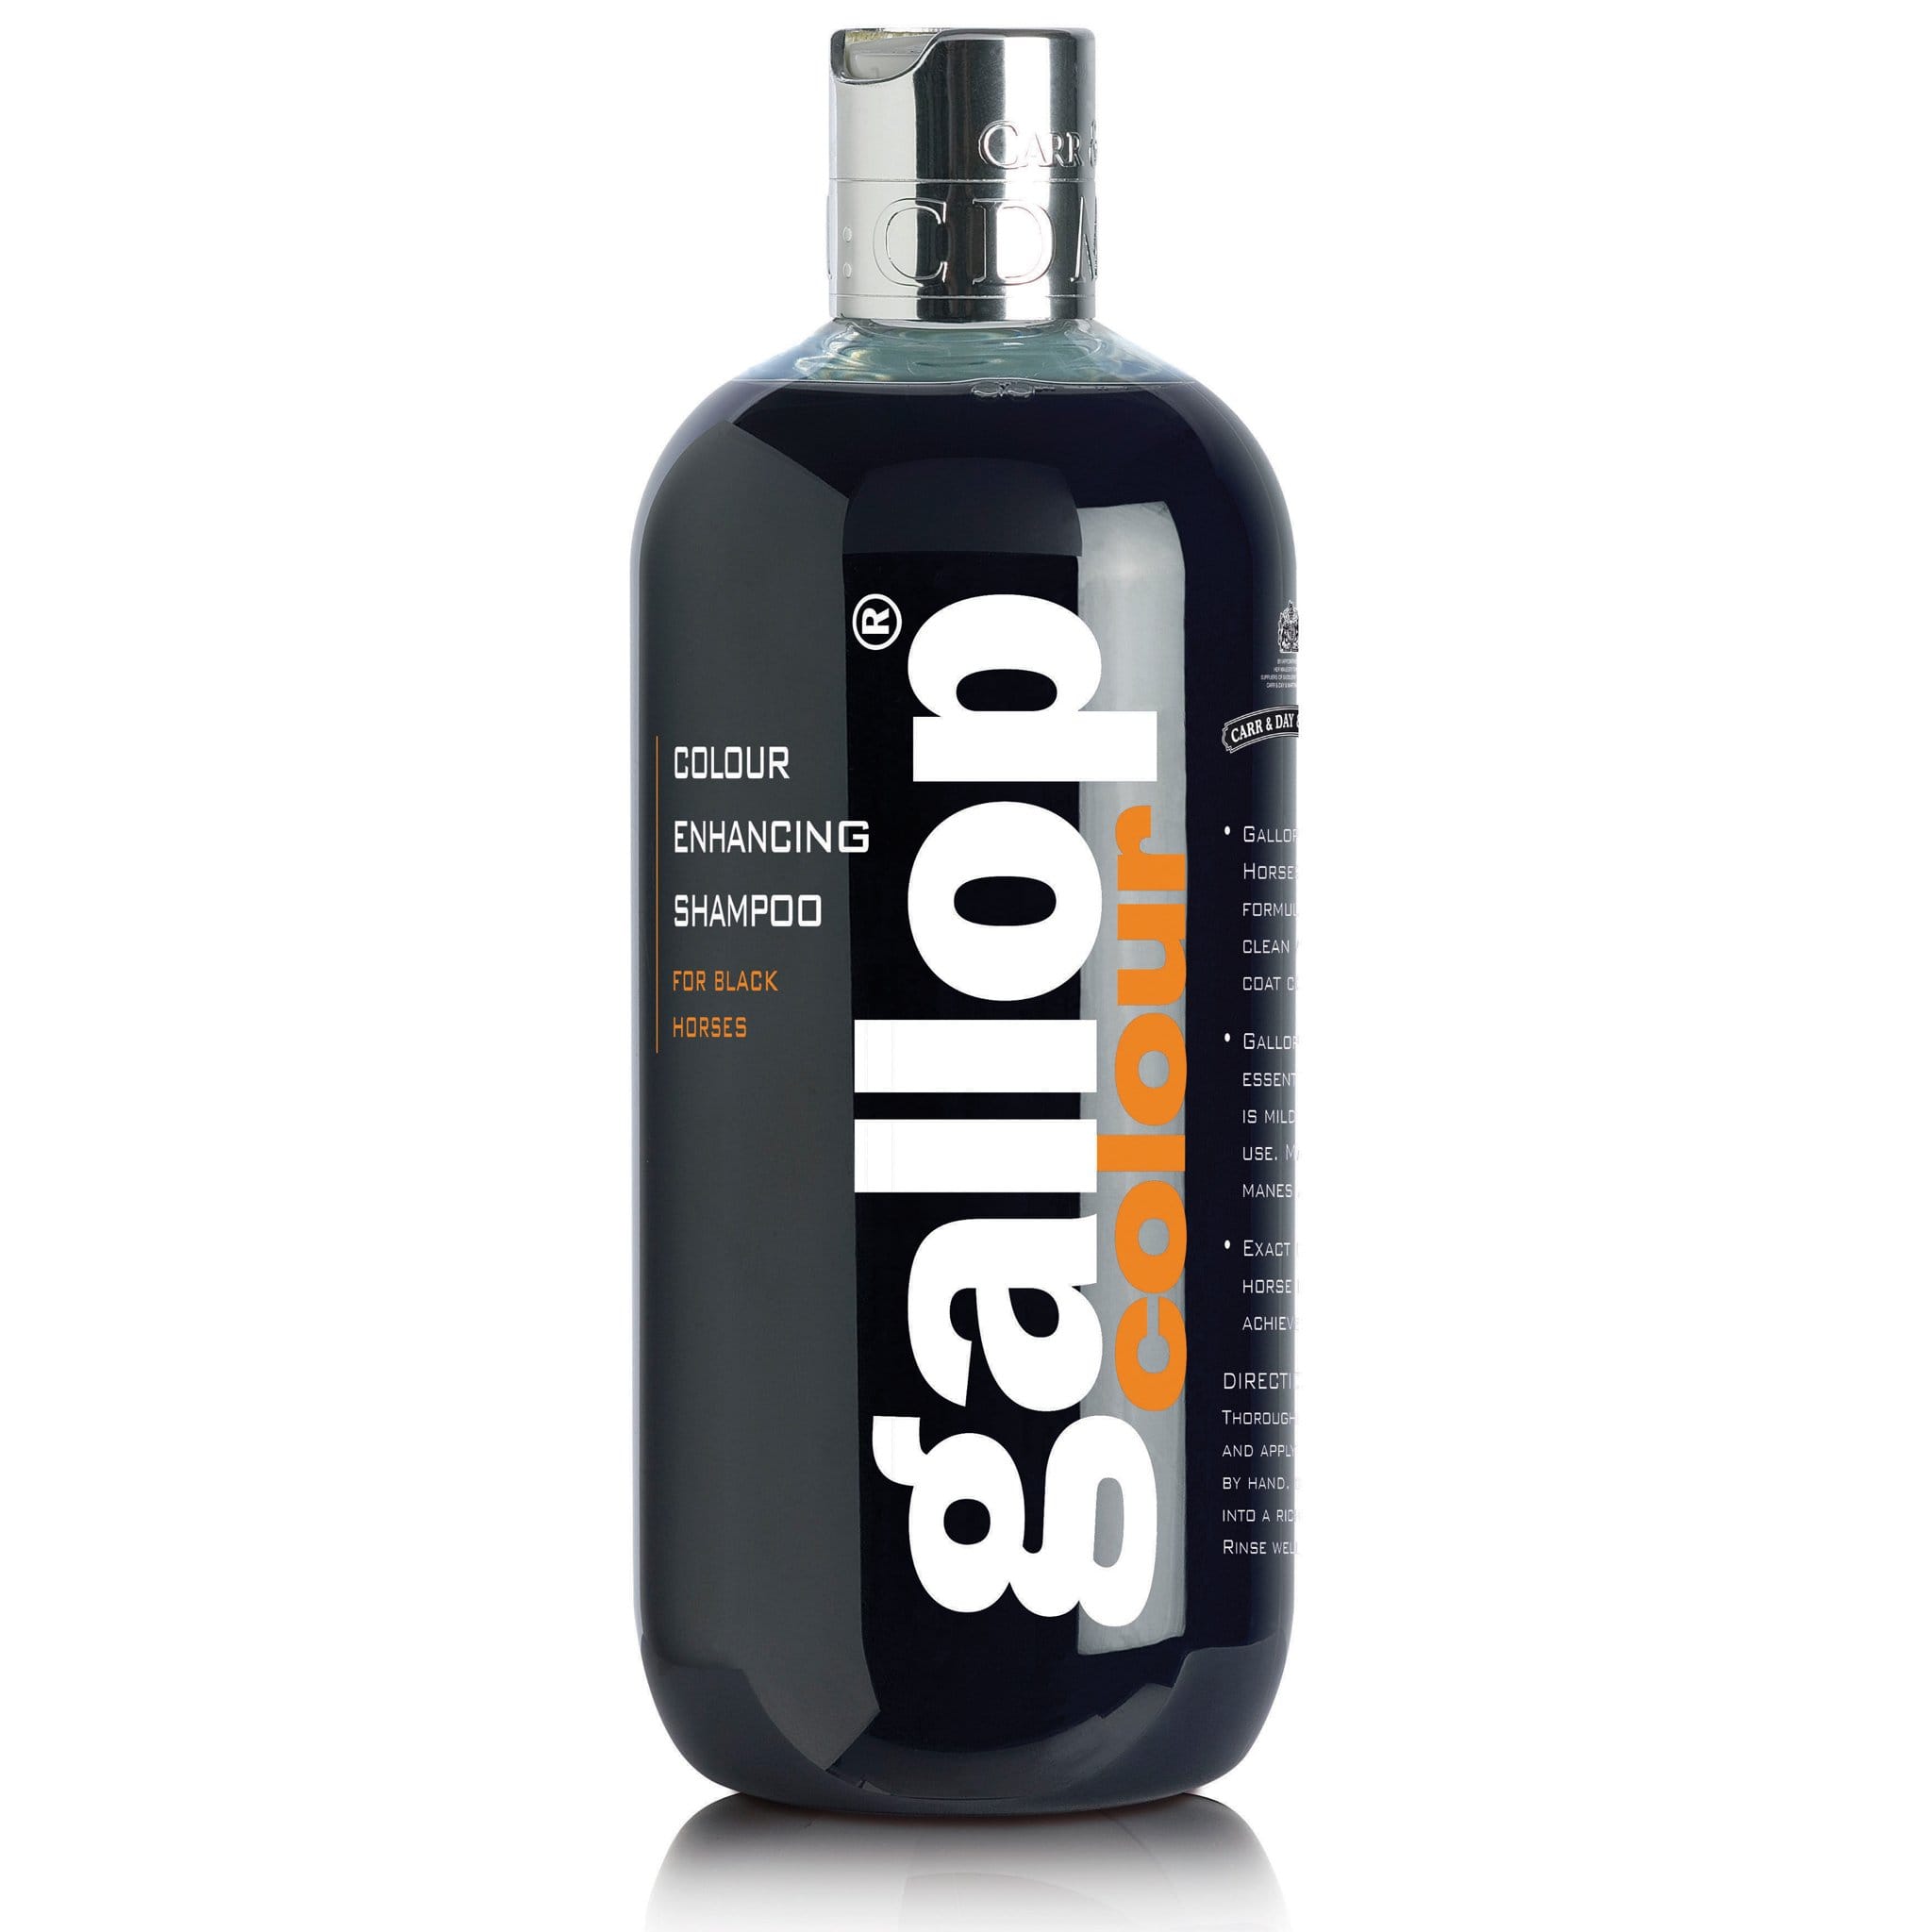 Carr & Day & Martin Gallop Colour Enhancing Shampoo for Black 7418